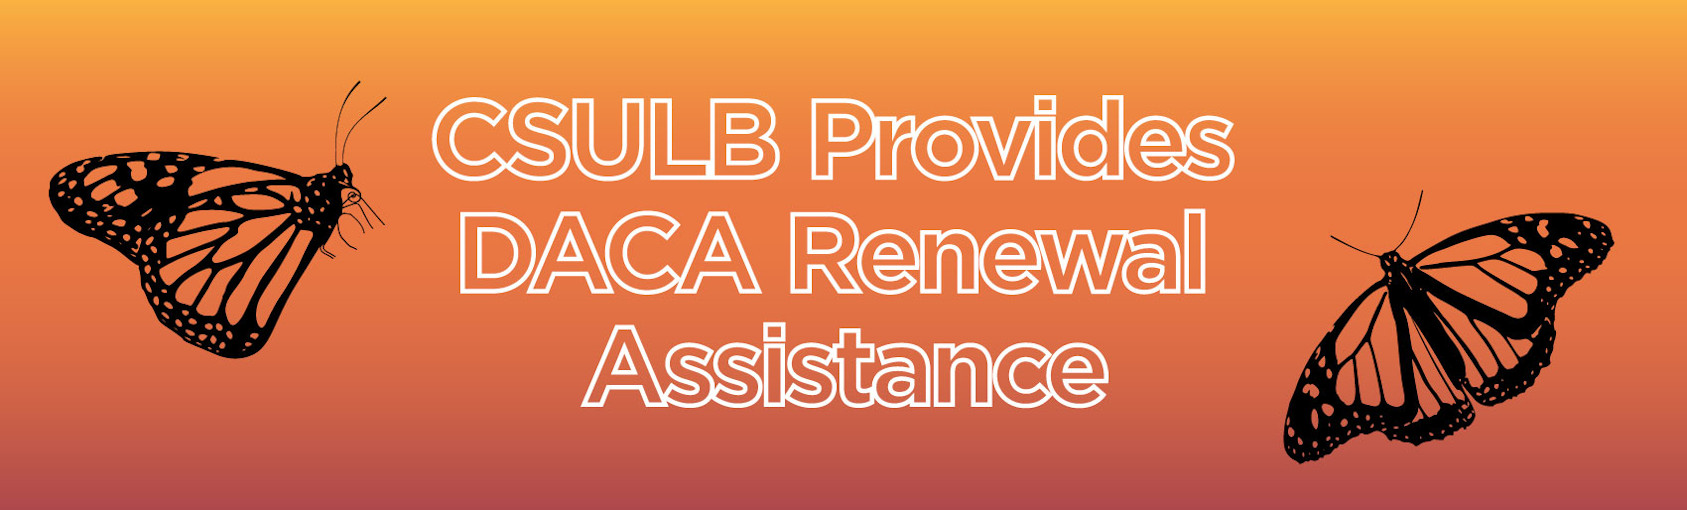 CSULB Provides DACA Renewal Assistance